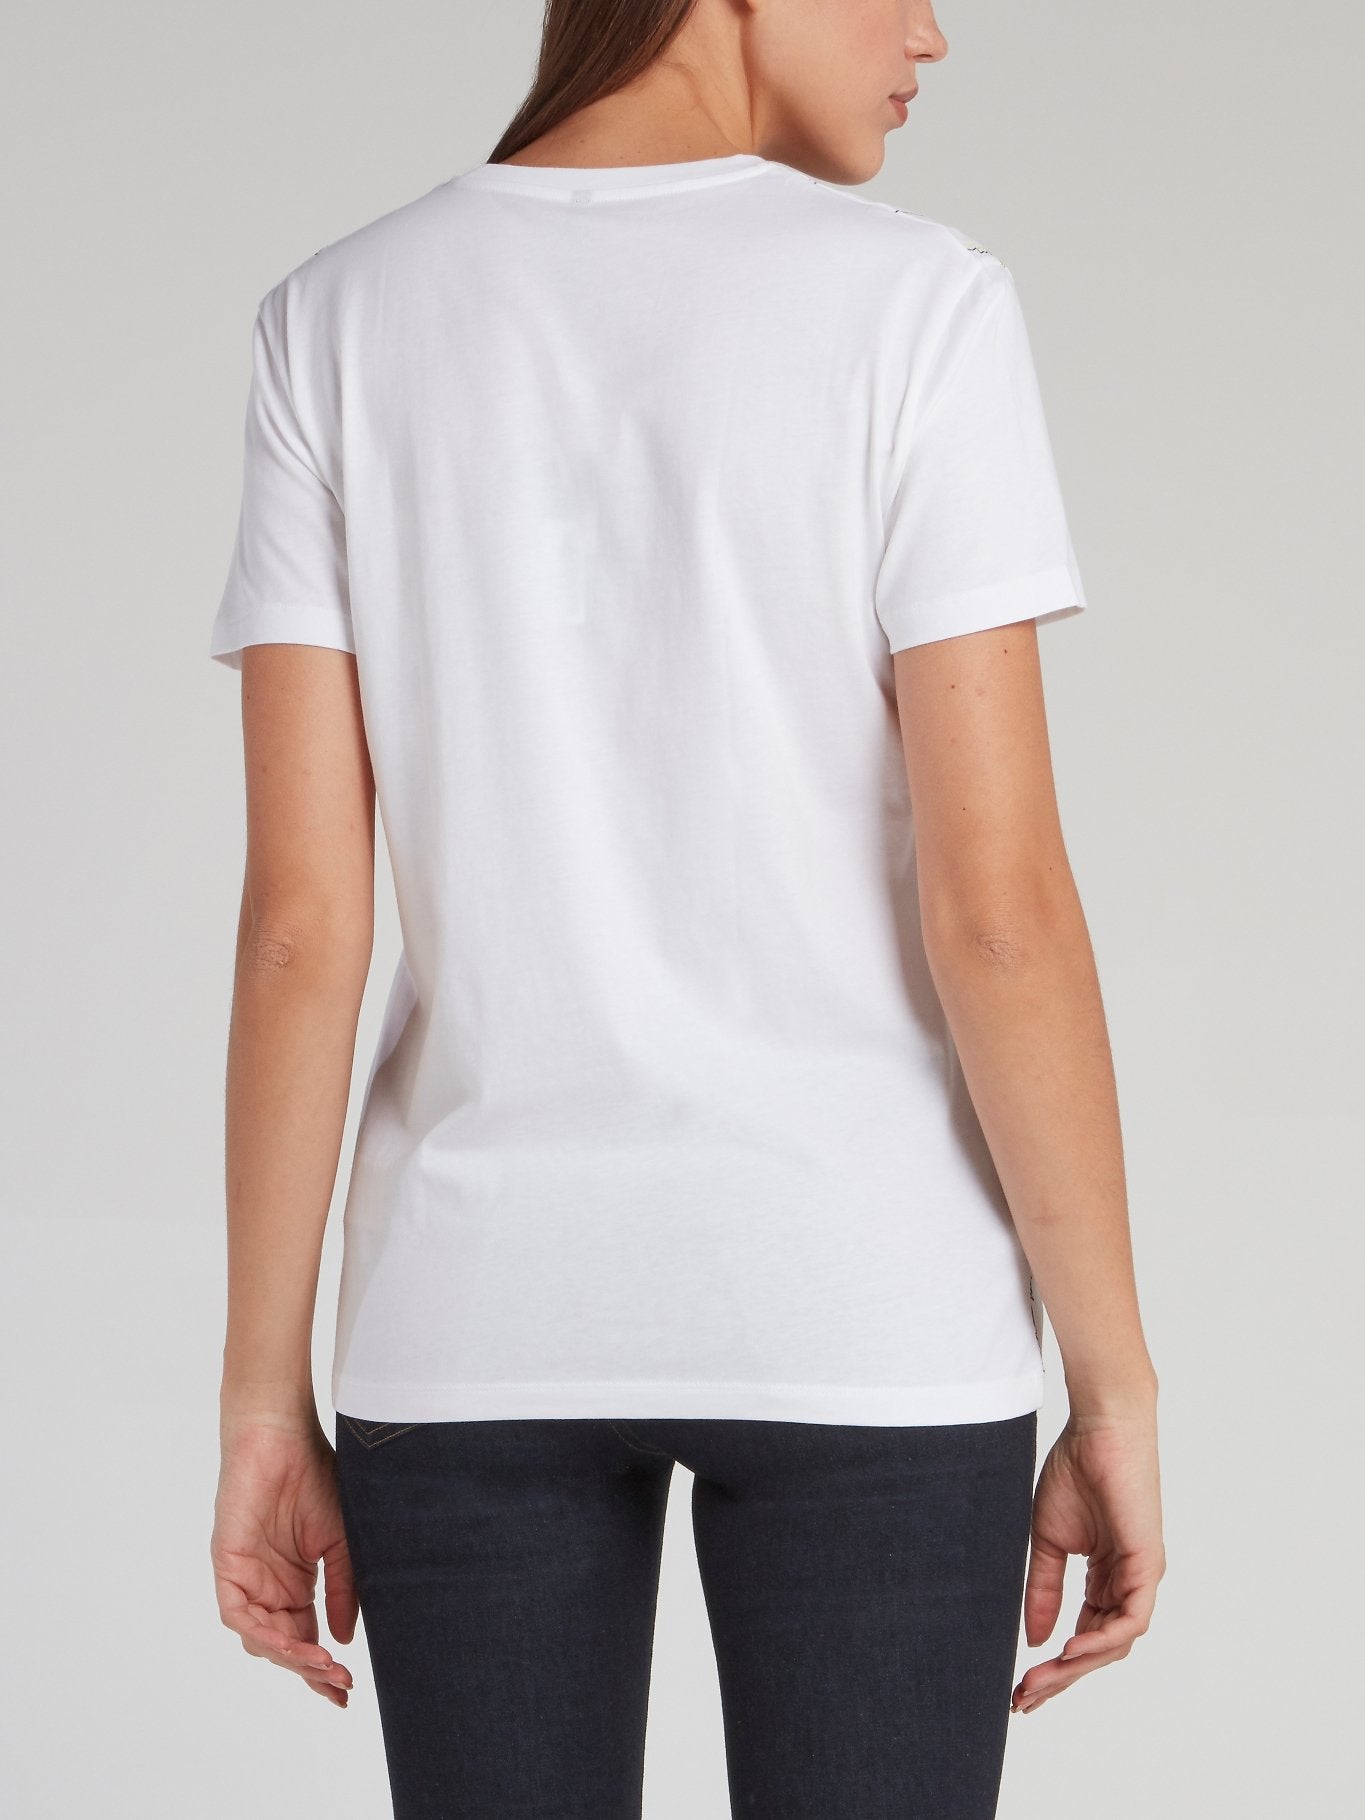 White Seismic Wave Print T-Shirt